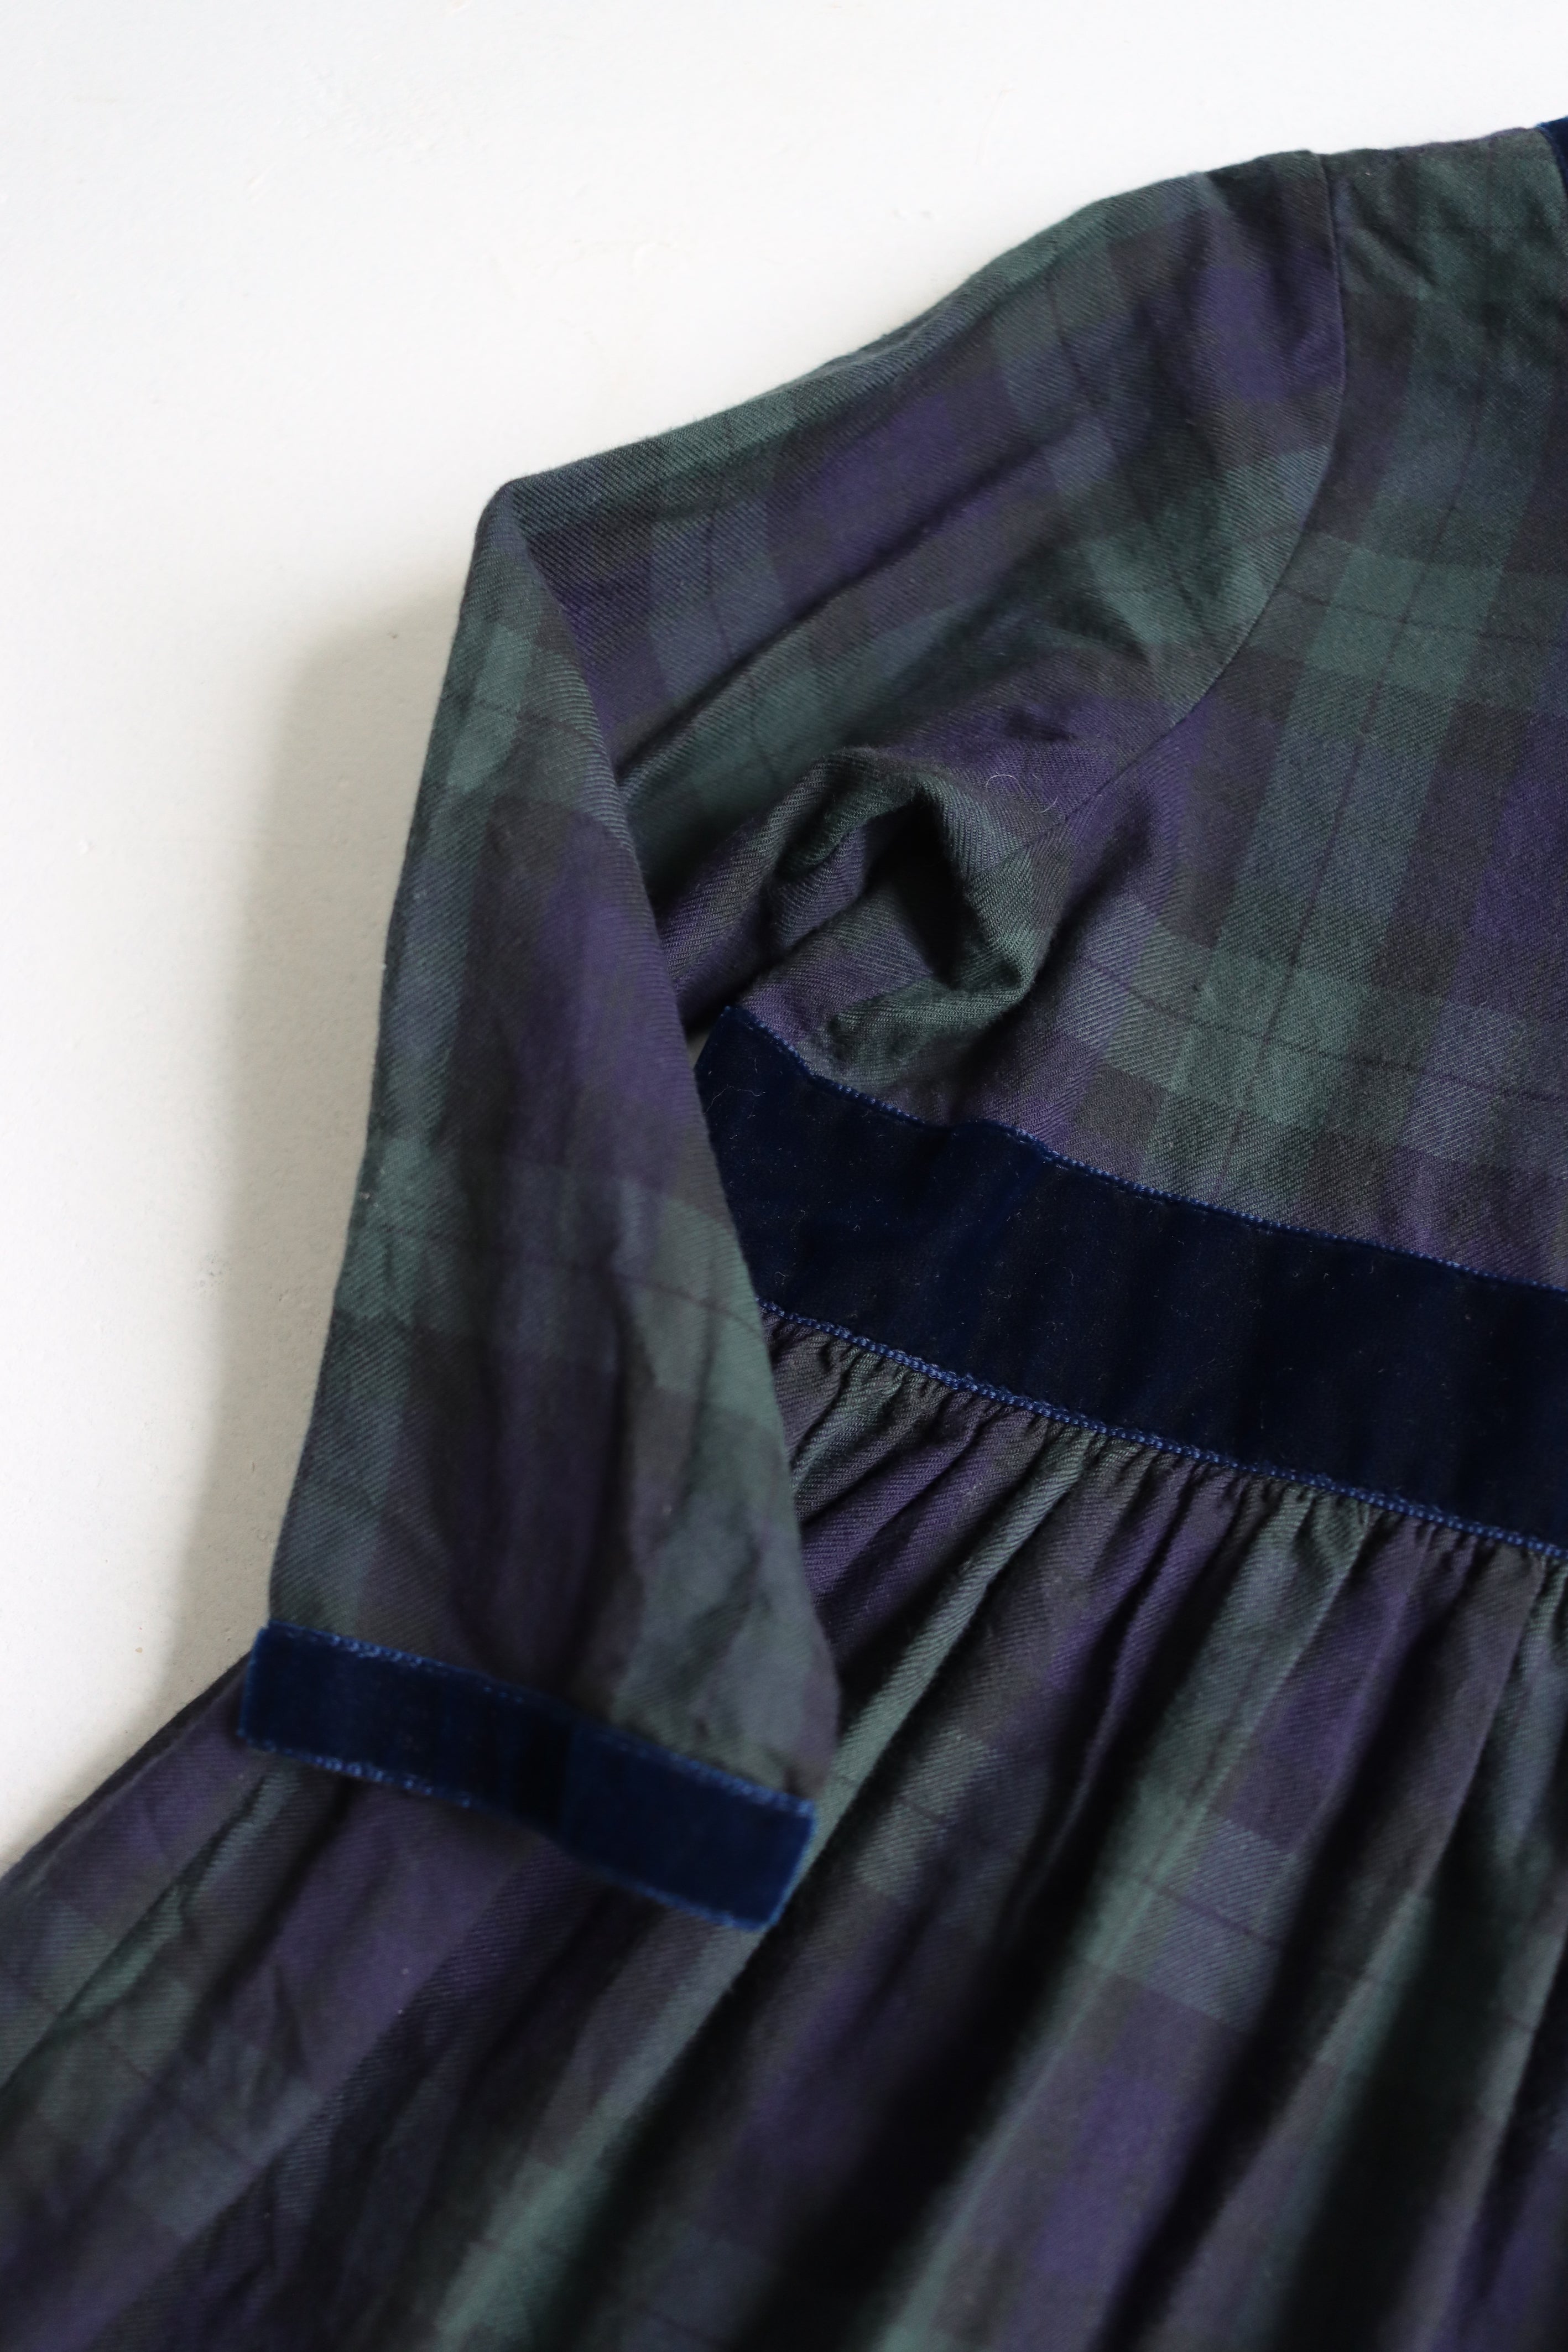 Vintage Laura Ashley classic tartan dress - Size 3 years